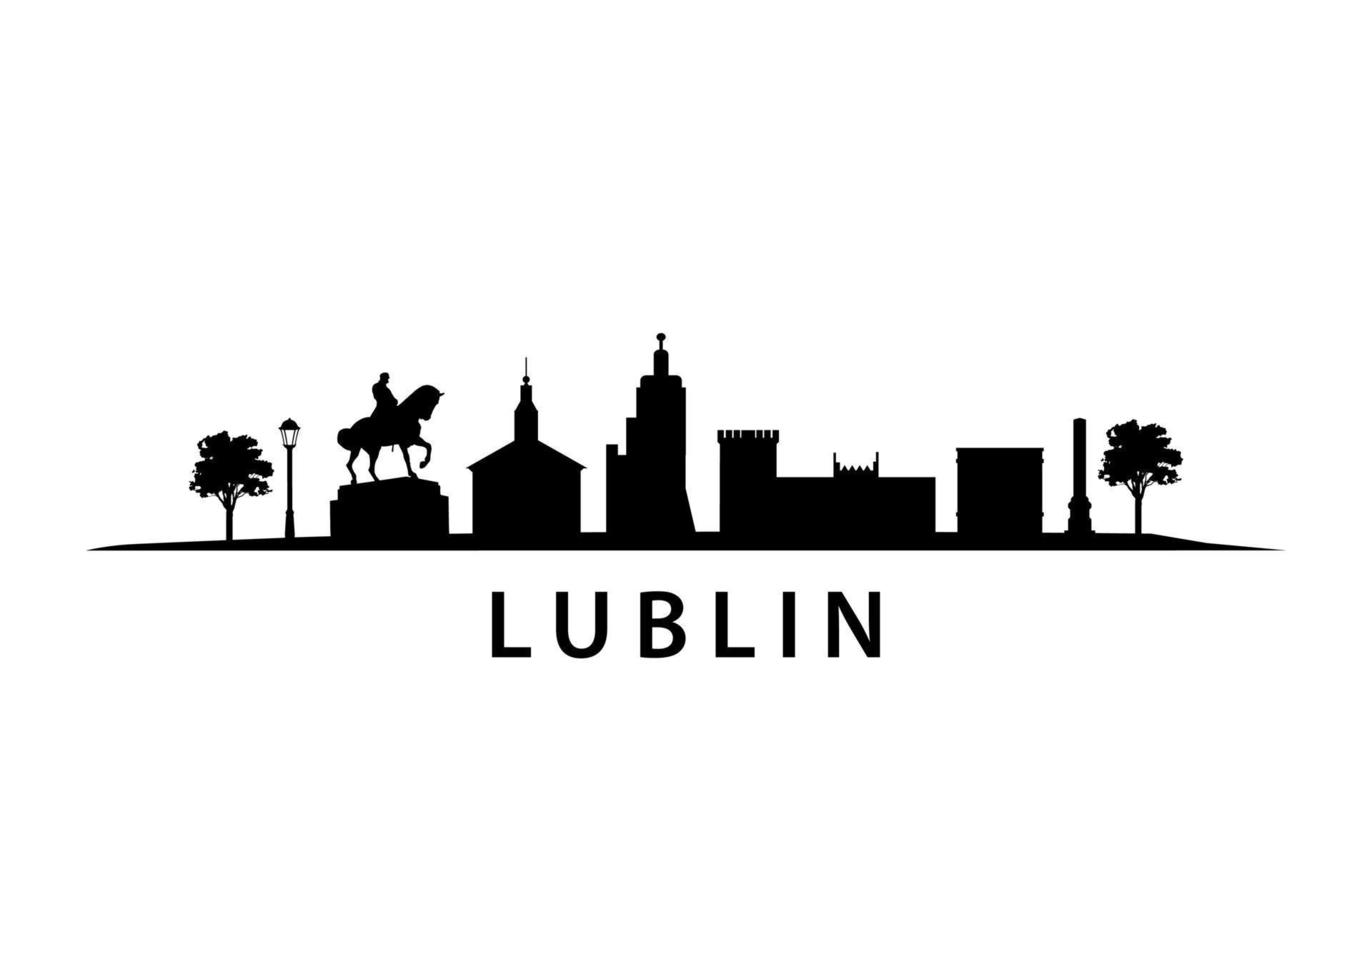 ciudad europea de lublin en polonia, edificios, calles, casco antiguo y monumentos, arquitectura polaca, paisaje panorámico horizonte gráfico vectorial plano vector